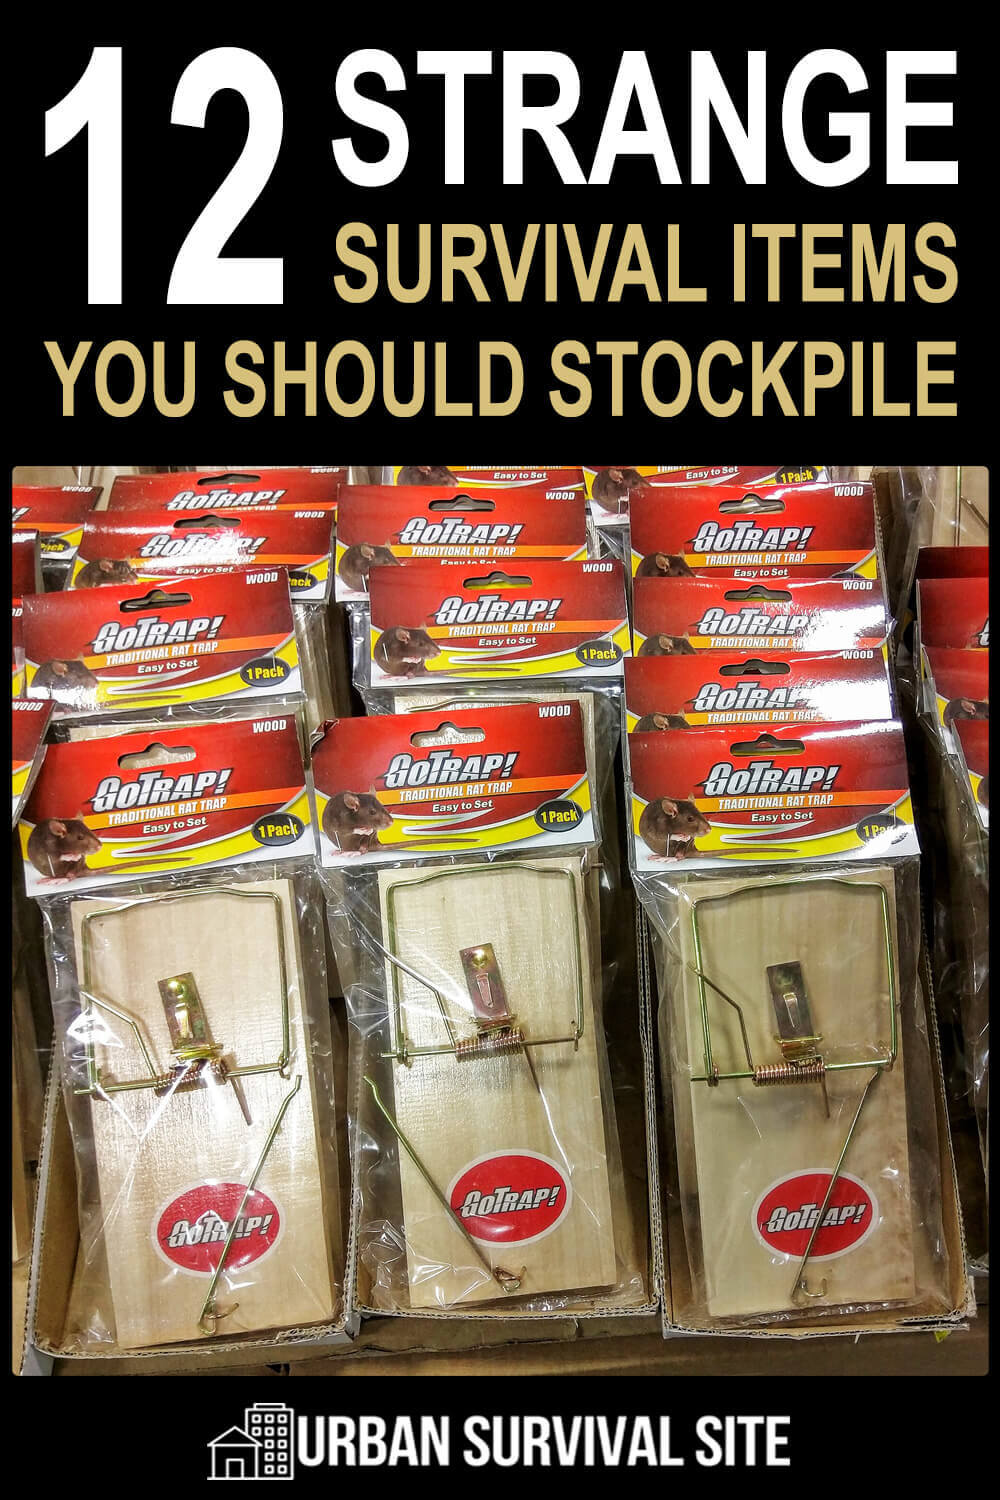 12 Strange Survival Items You Should Stockpile